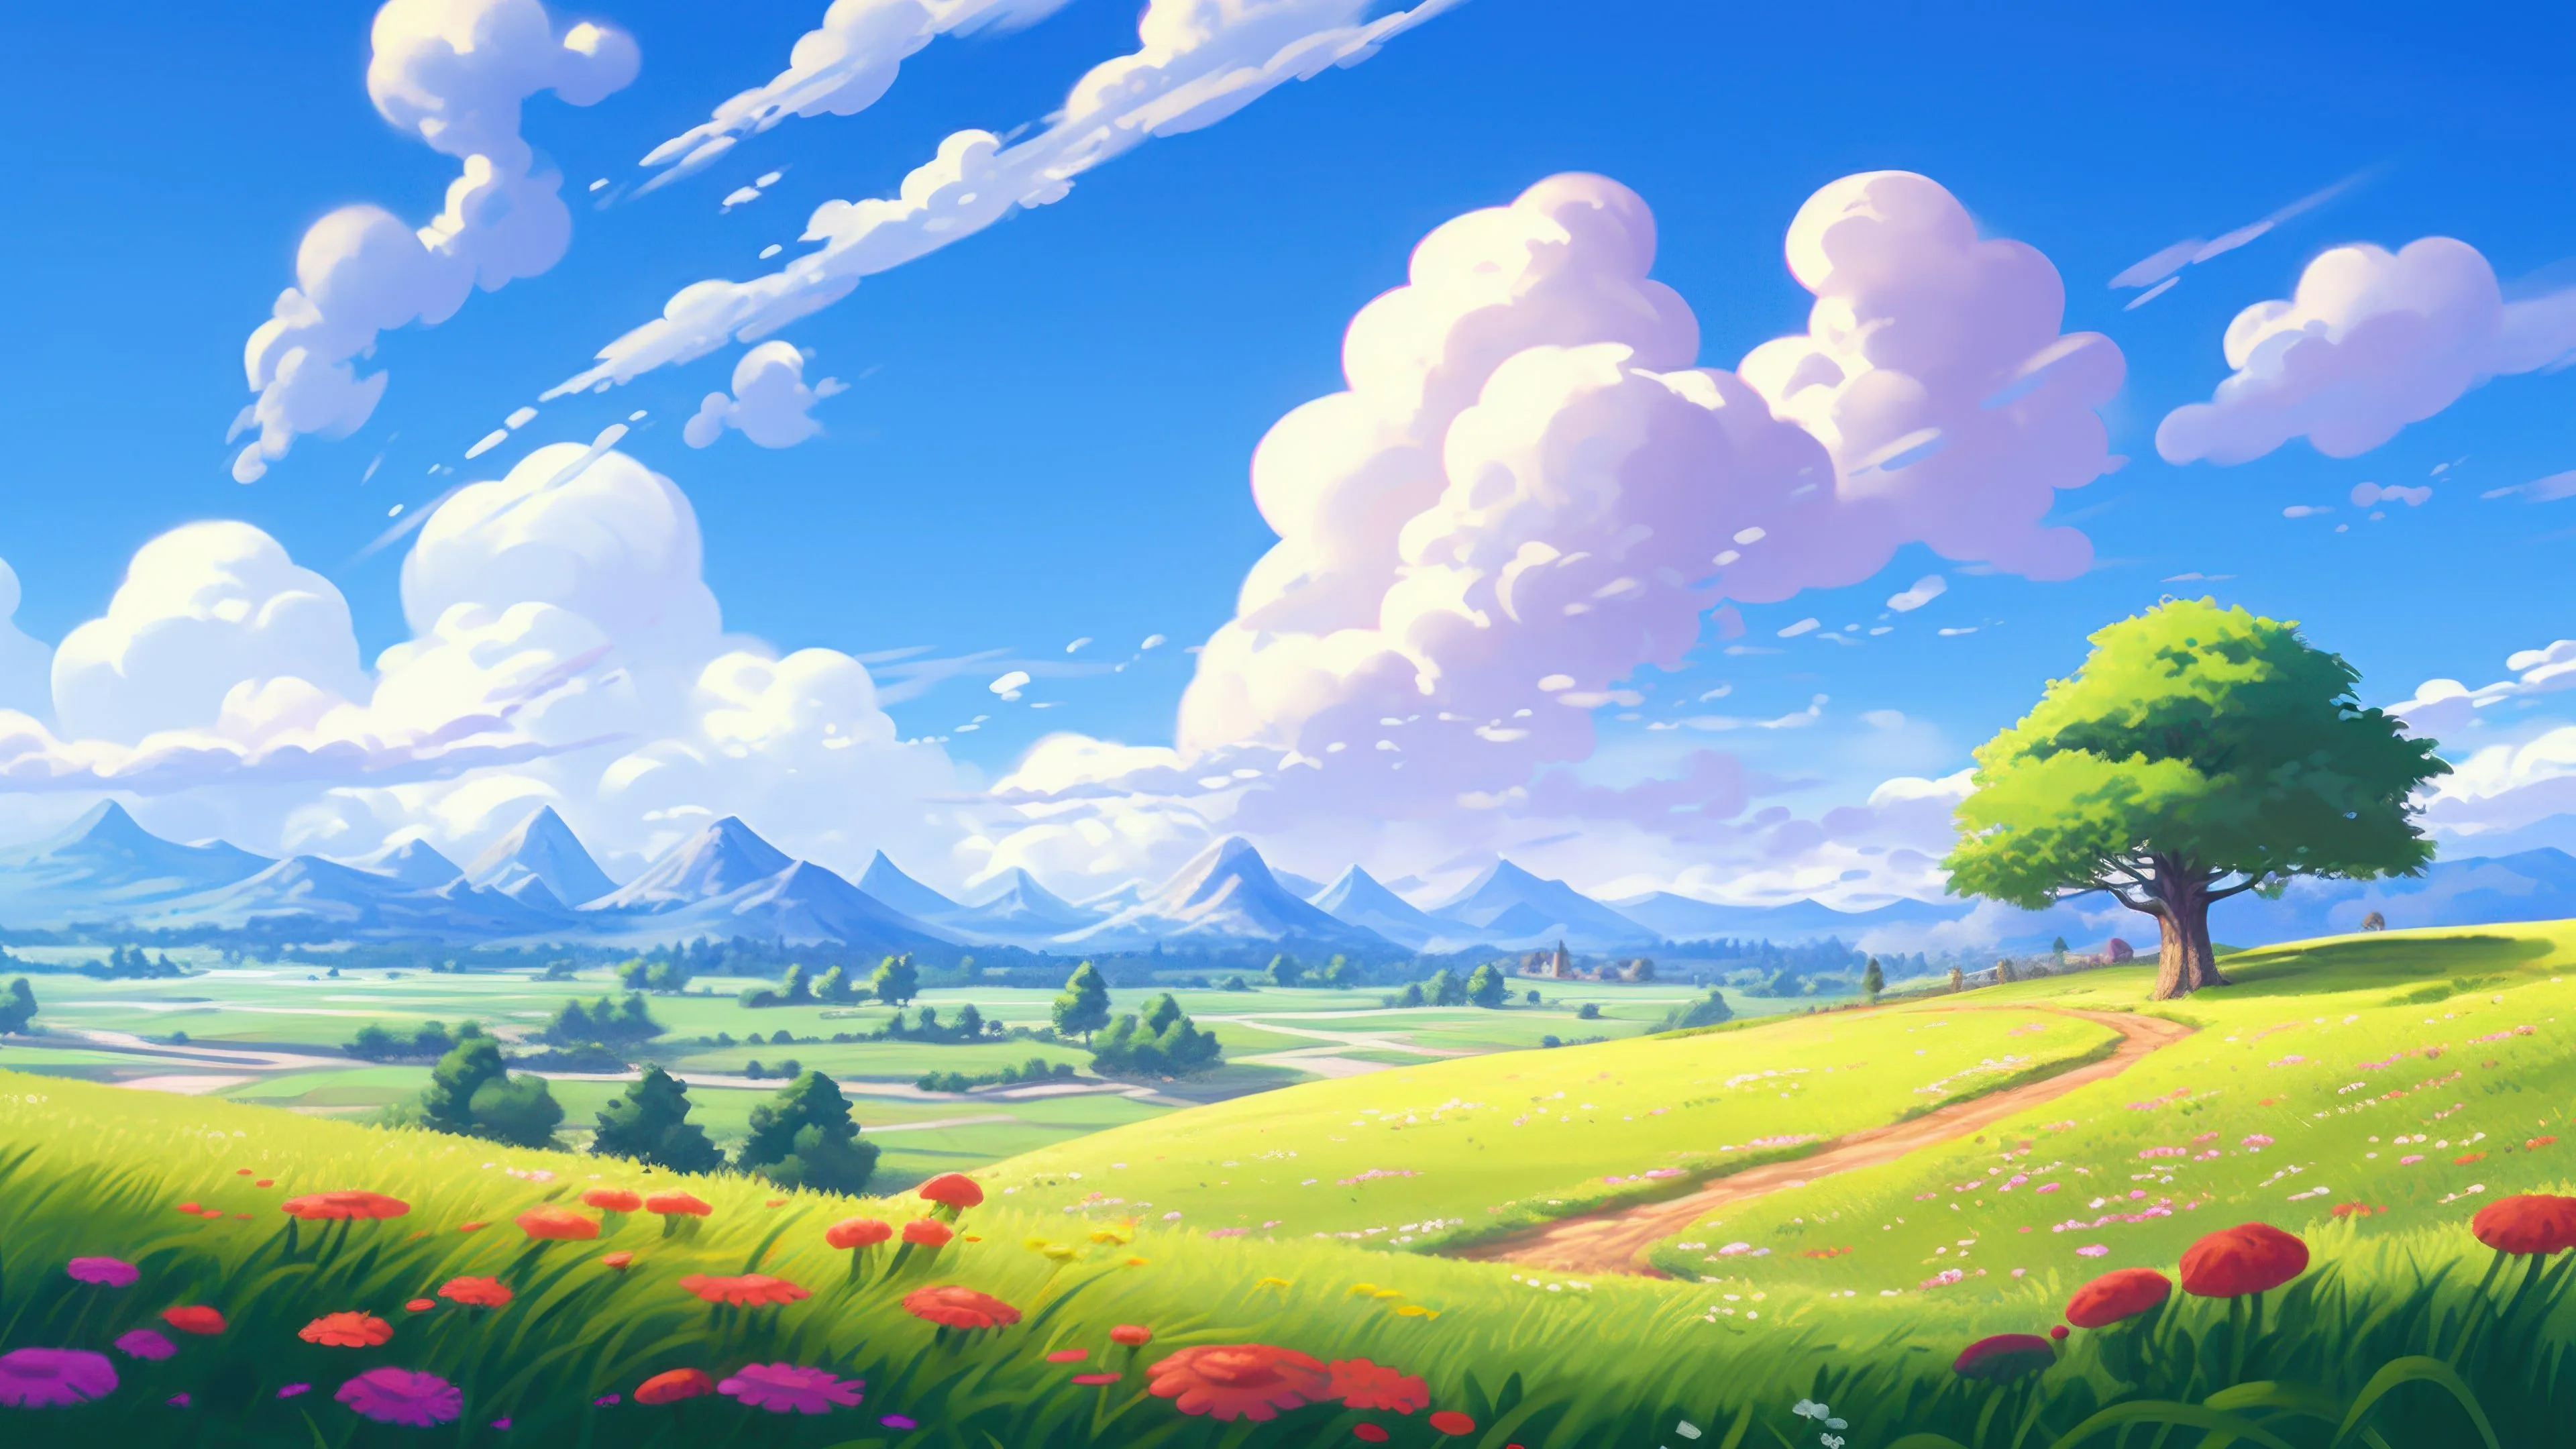 3,742 Anime Grass Images, Stock Photos & Vectors | Shutterstock